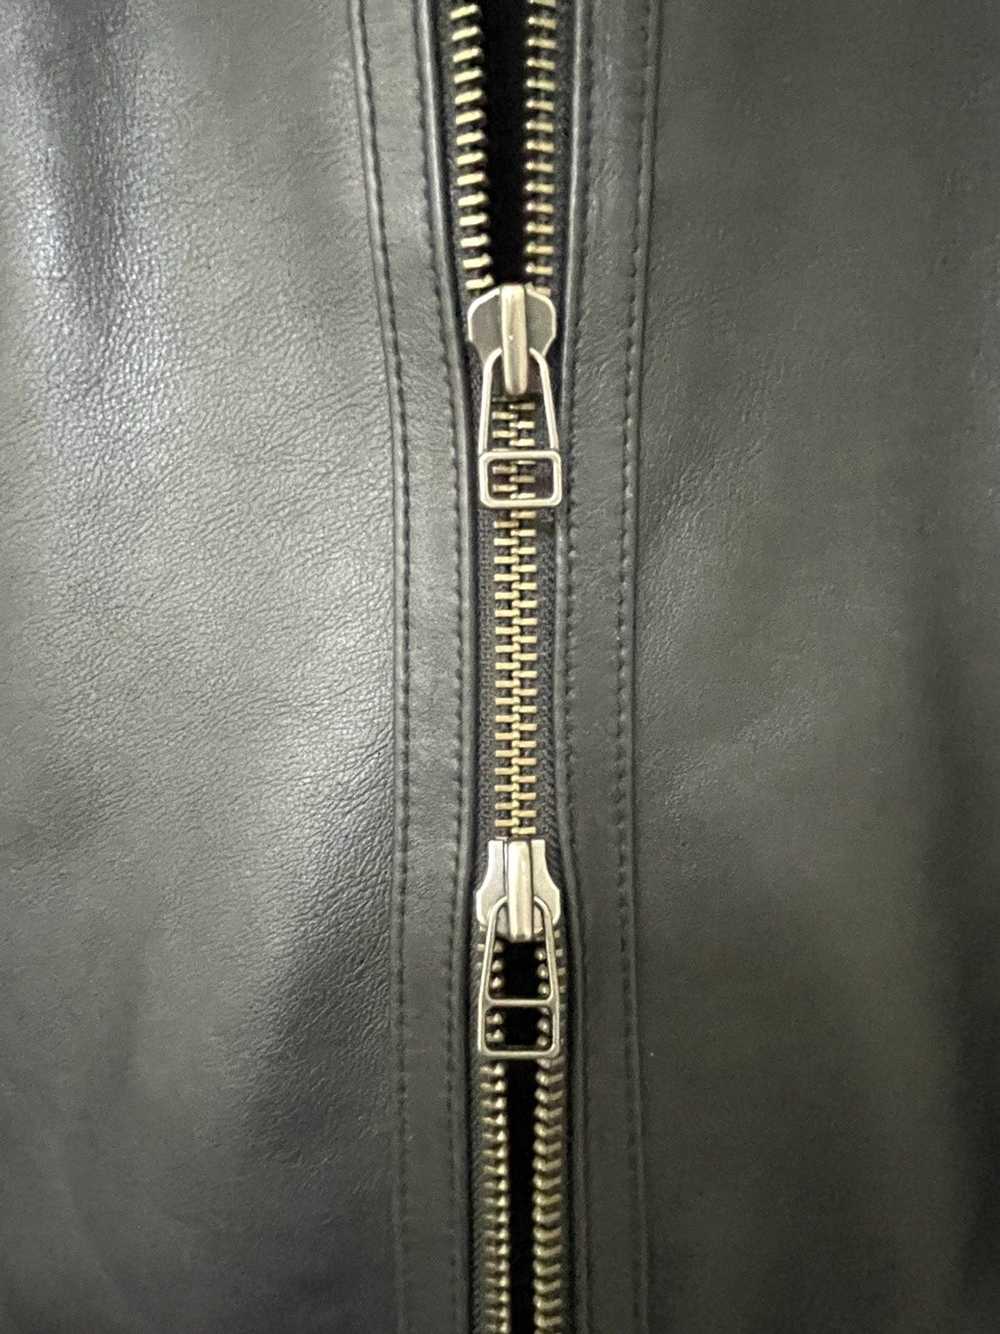 Jack Spade Jack Spade leather jacket near mint - image 5